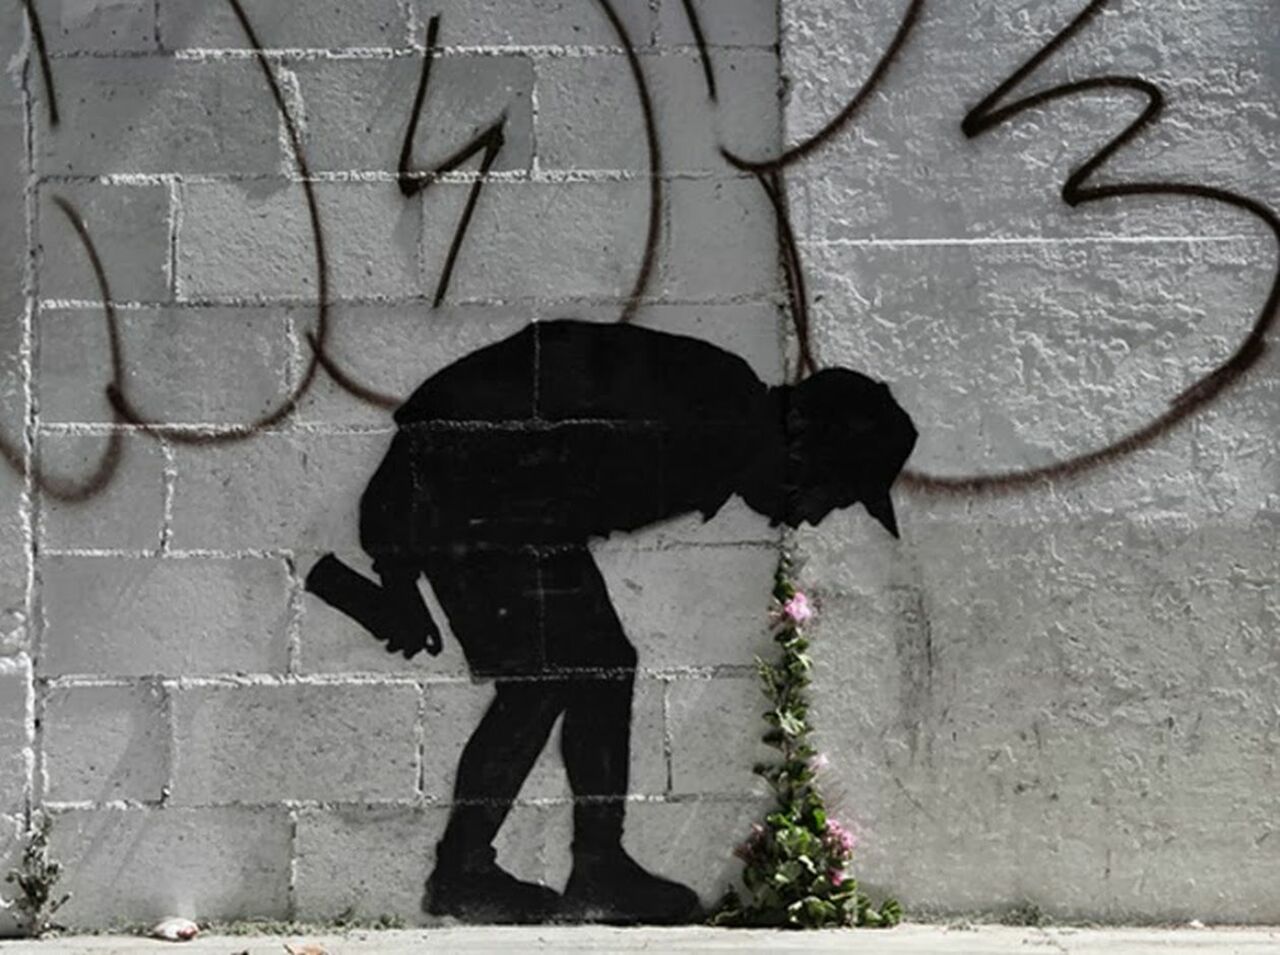 #StreetArtSaturday Another #Banksy natural #Streetart utilizing natural growth. https://t.co/B6CV3ZgsS0